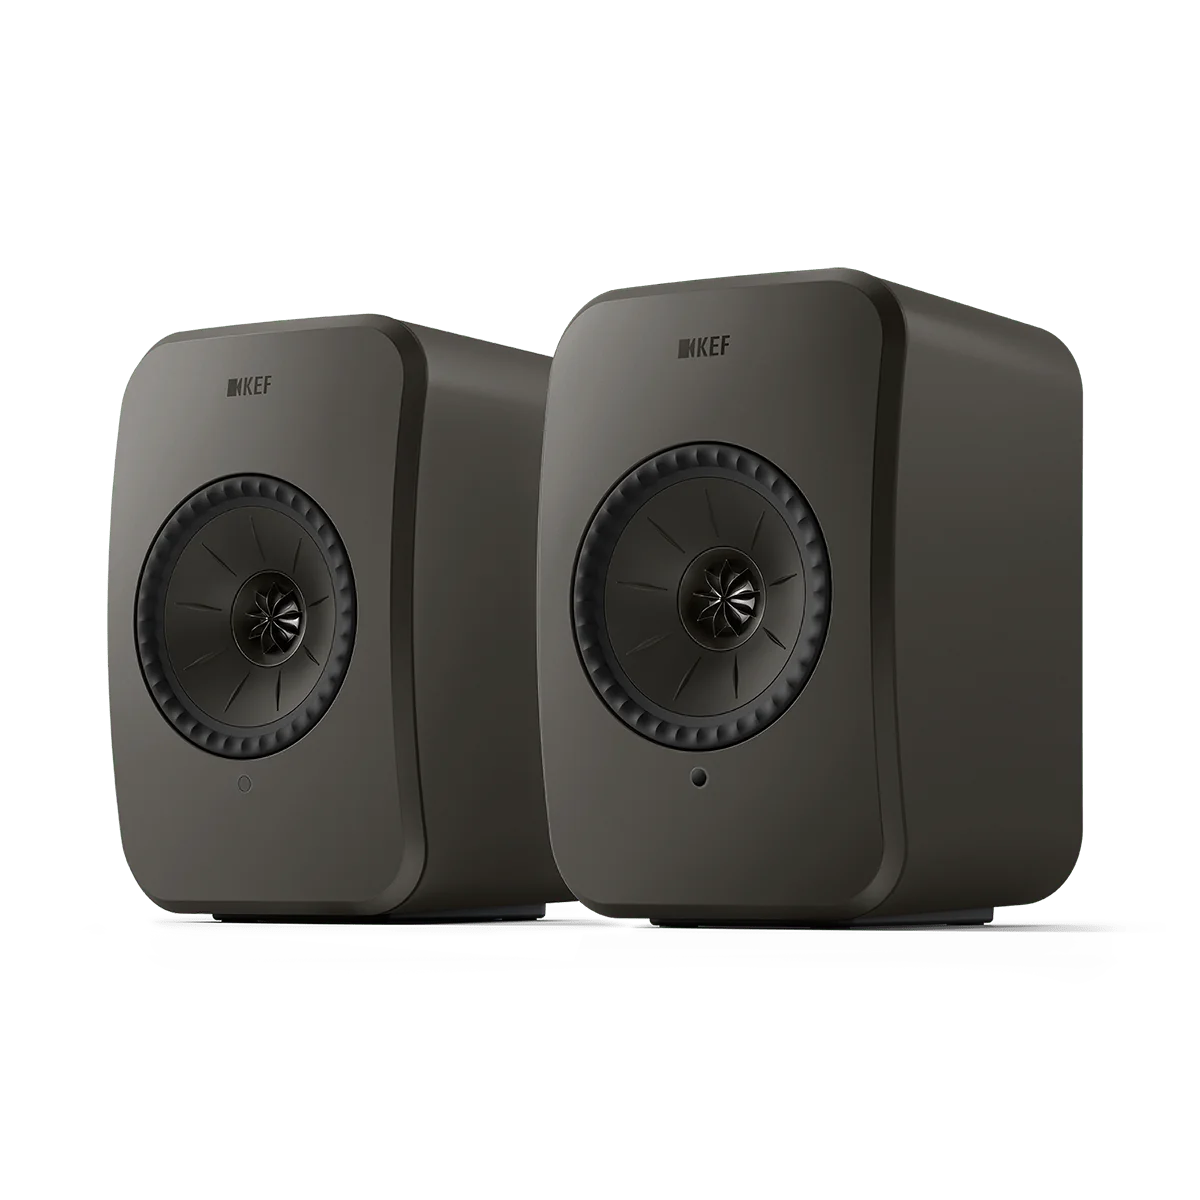 KEF LSX II LT Wireless Active Hi-Fi Speakers #colour_graphite grey